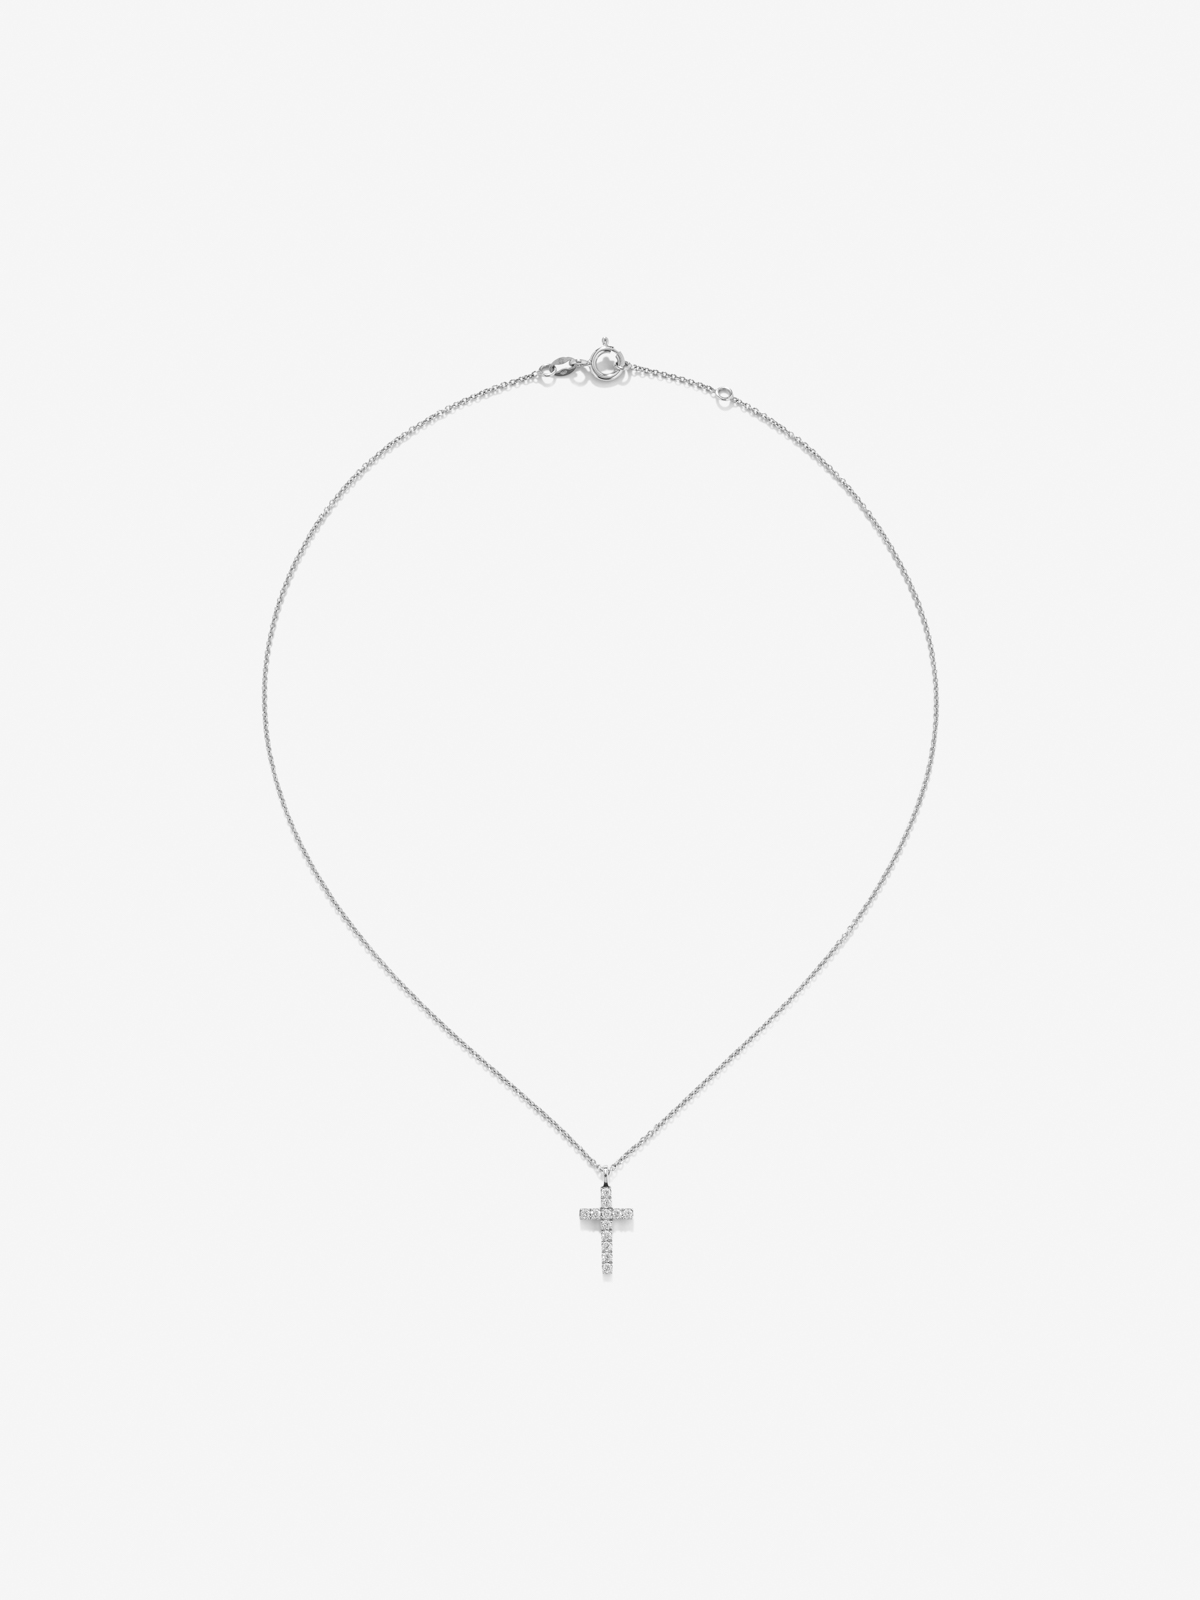 18K white gold cross pendant chain with diamonds